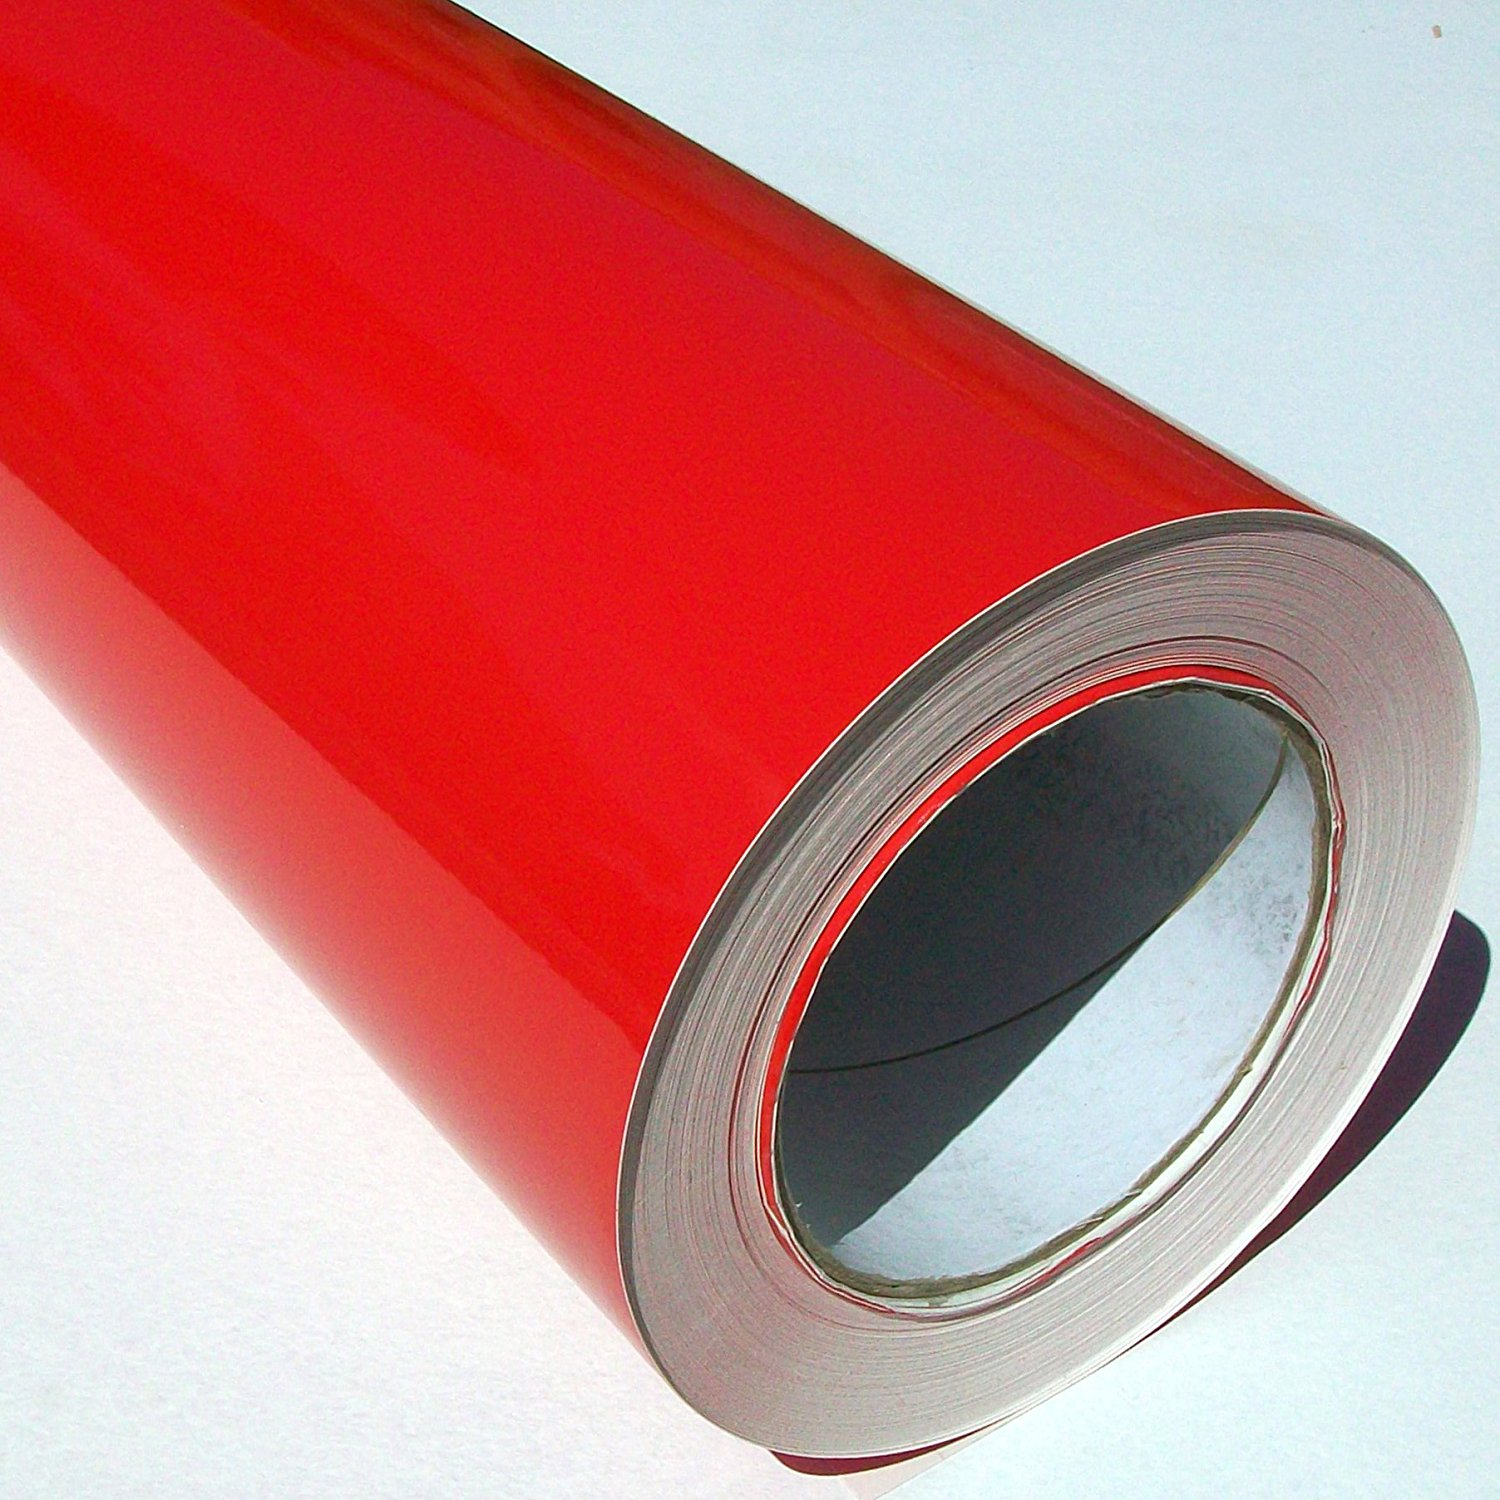 buy-nawab-red-gloss-vinyl-car-wrap-sheet-roll-film-sticker-decal-12x24